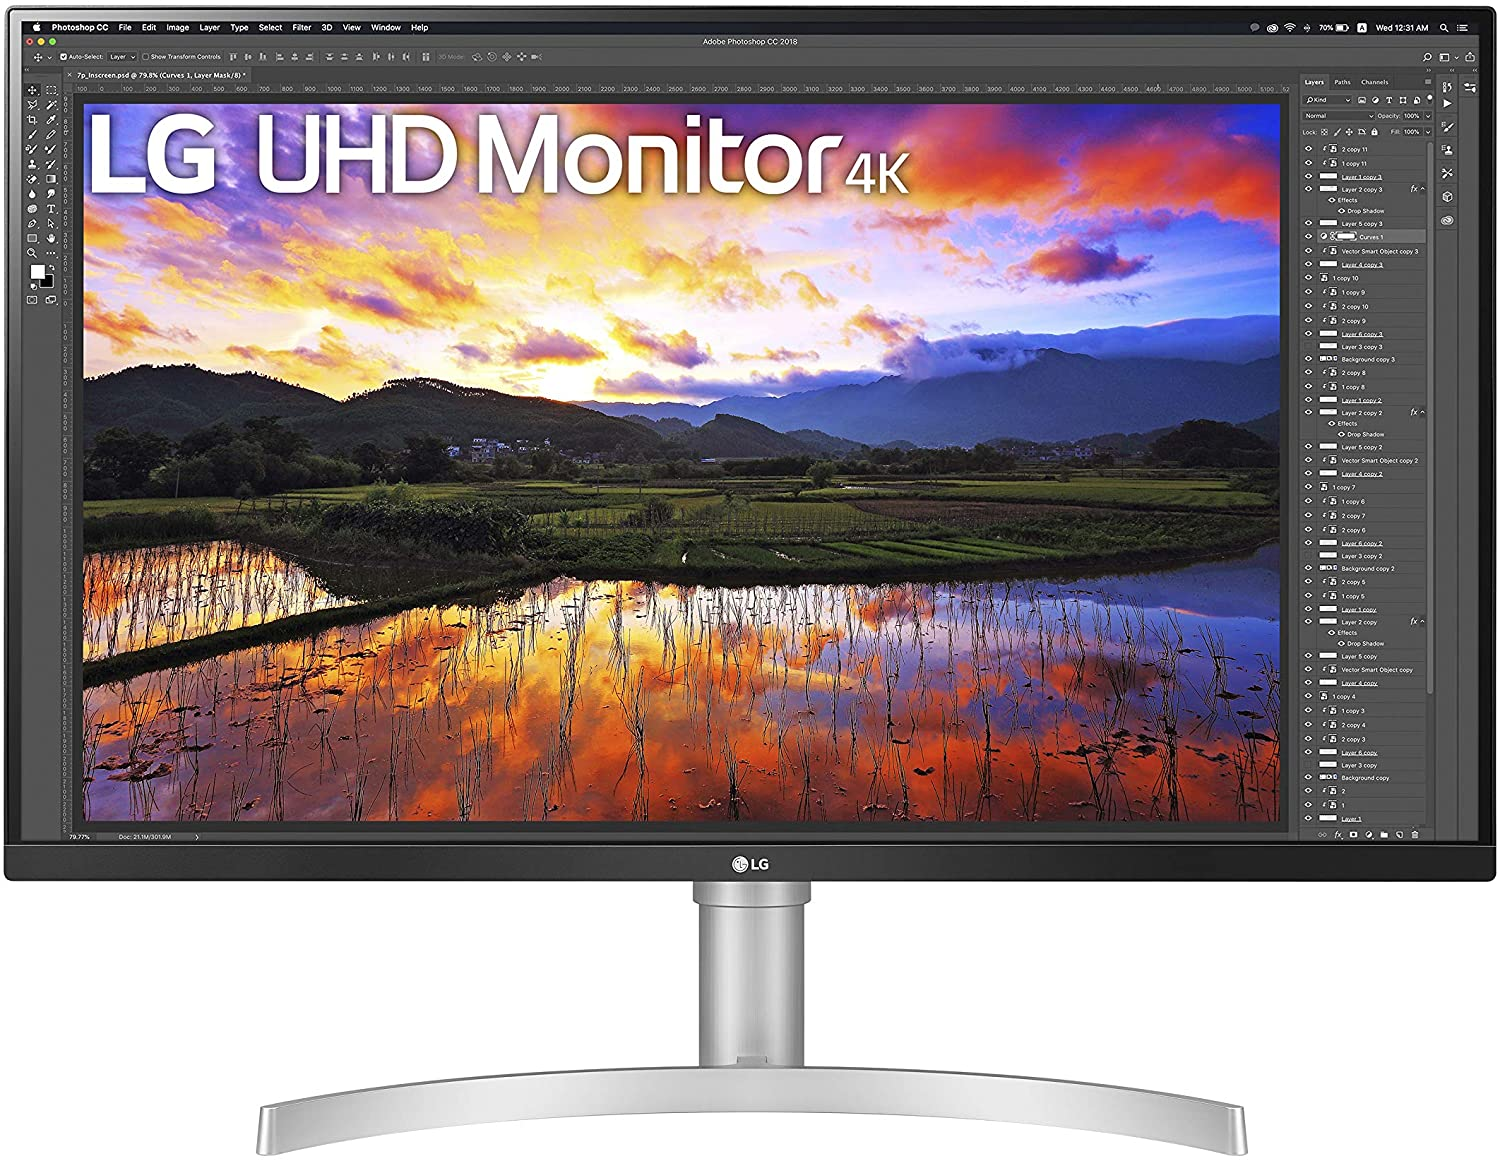 Amazon.com: LG 32UN650-W Monitor 32" UHD (3840 x 2160) IPS Ultrafine Display $400